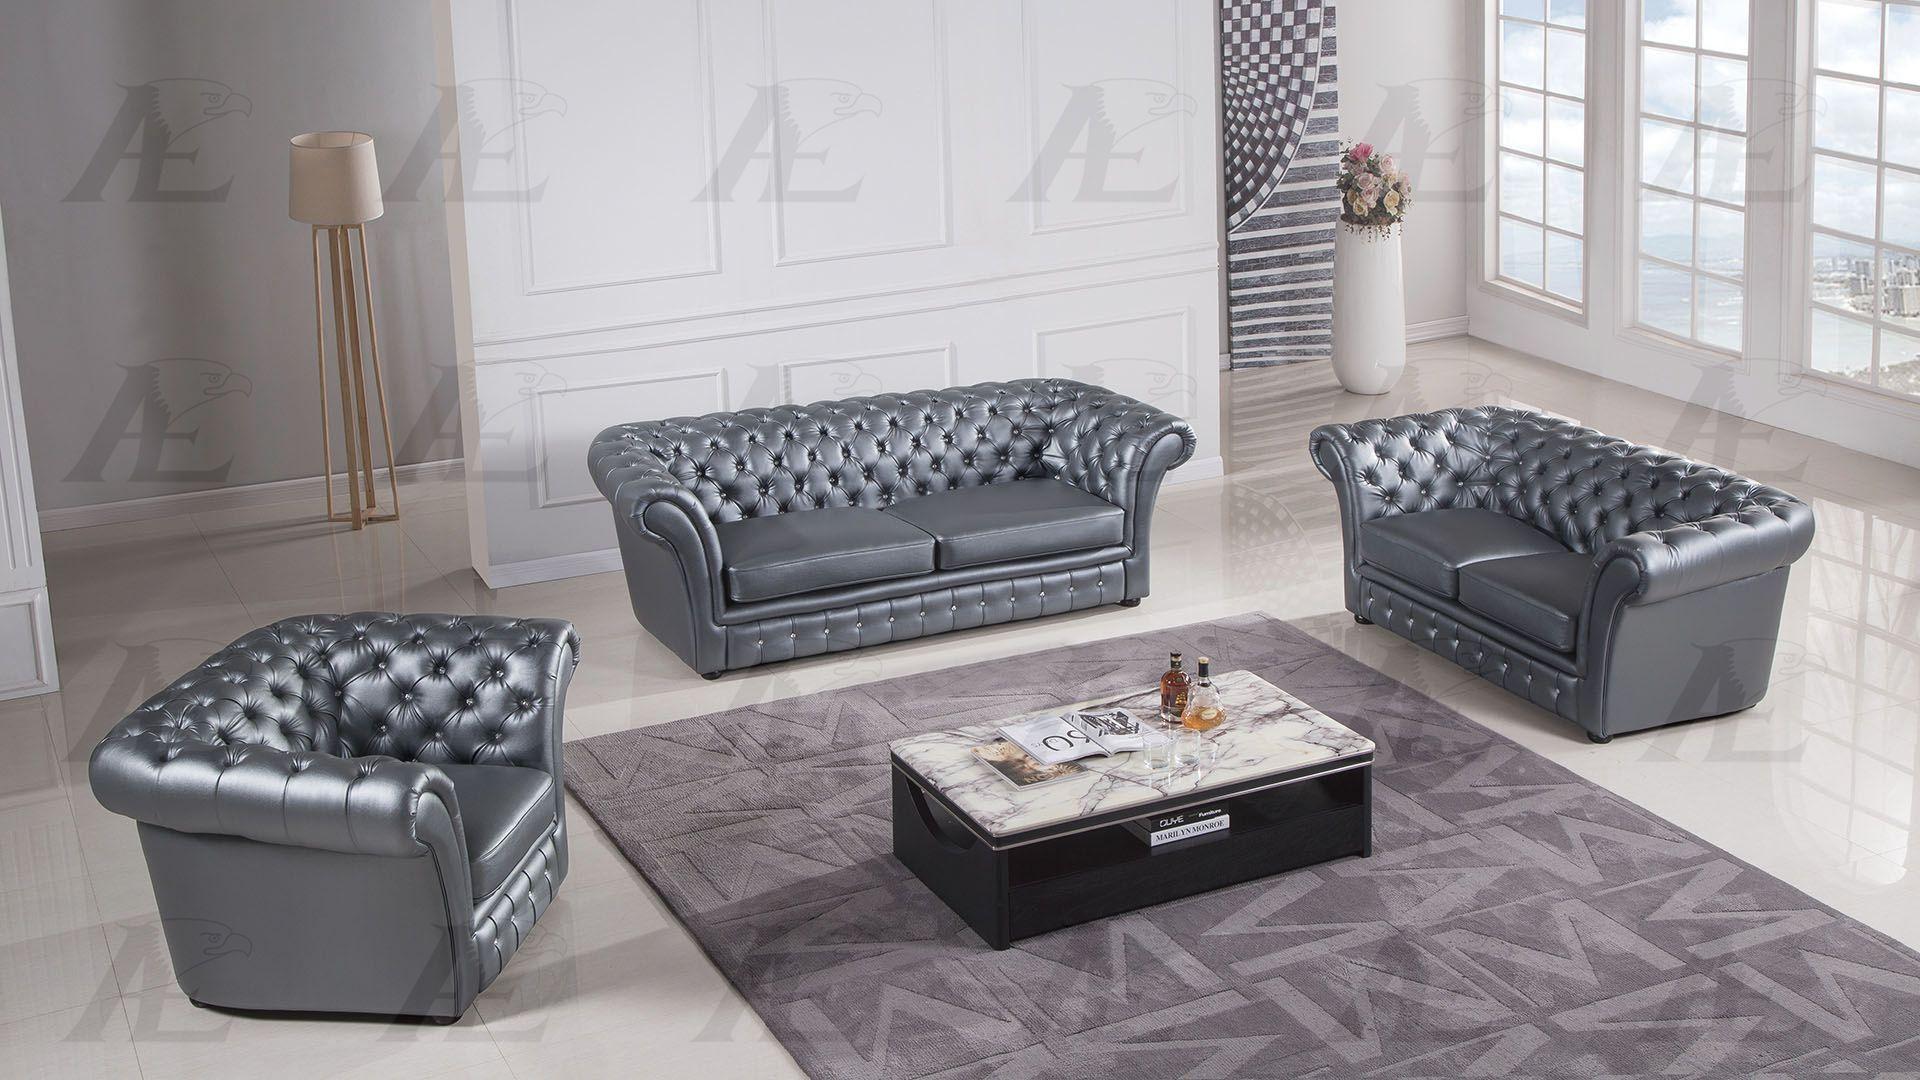 

                    
American Eagle Furniture AE503-DG Sofa Dark Gray Faux Leather Purchase 
